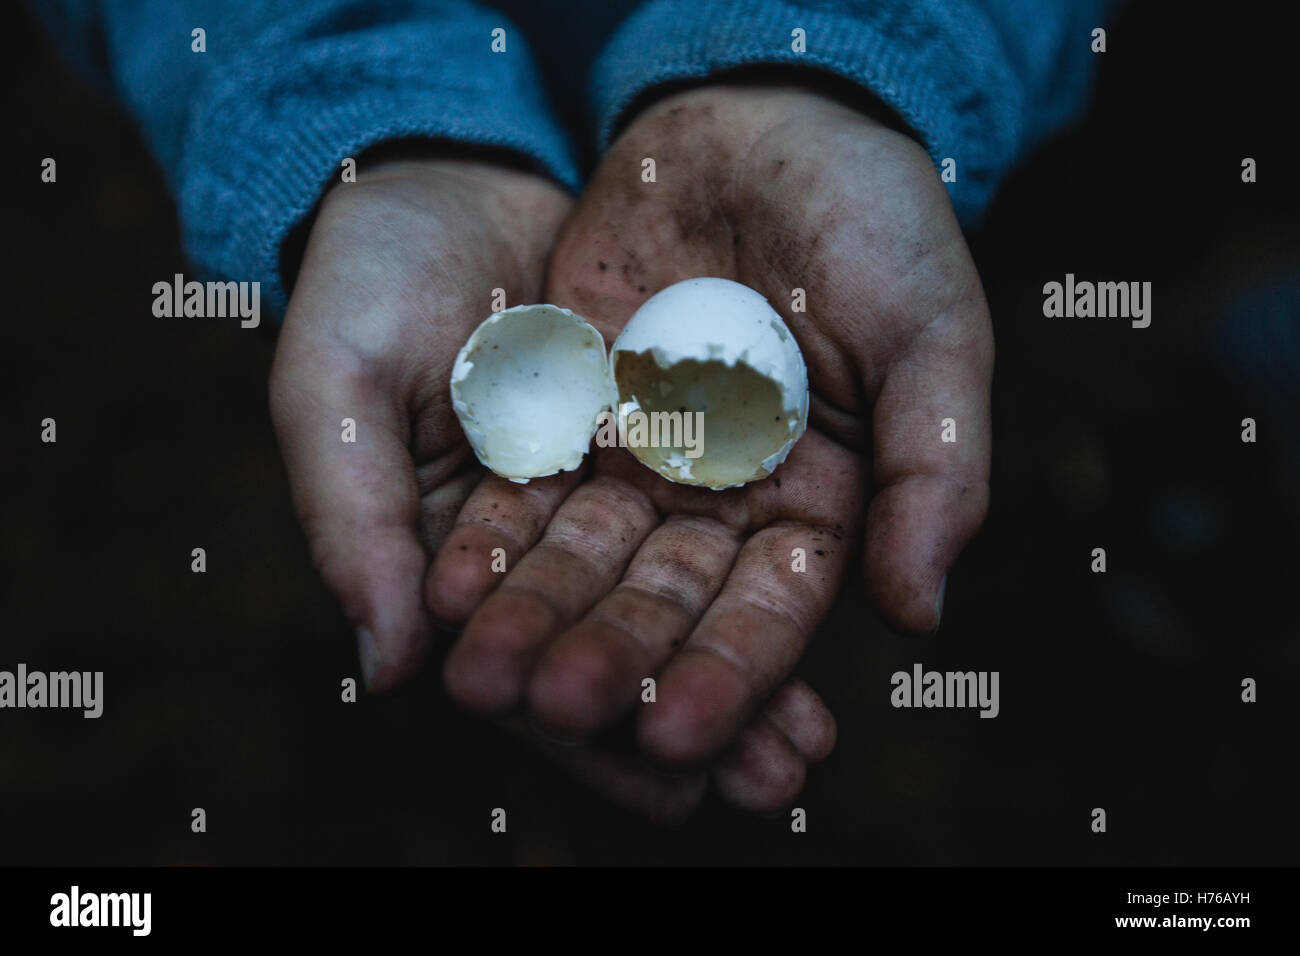 Boy's dirty hands holding a broken egg shell Stock Photo